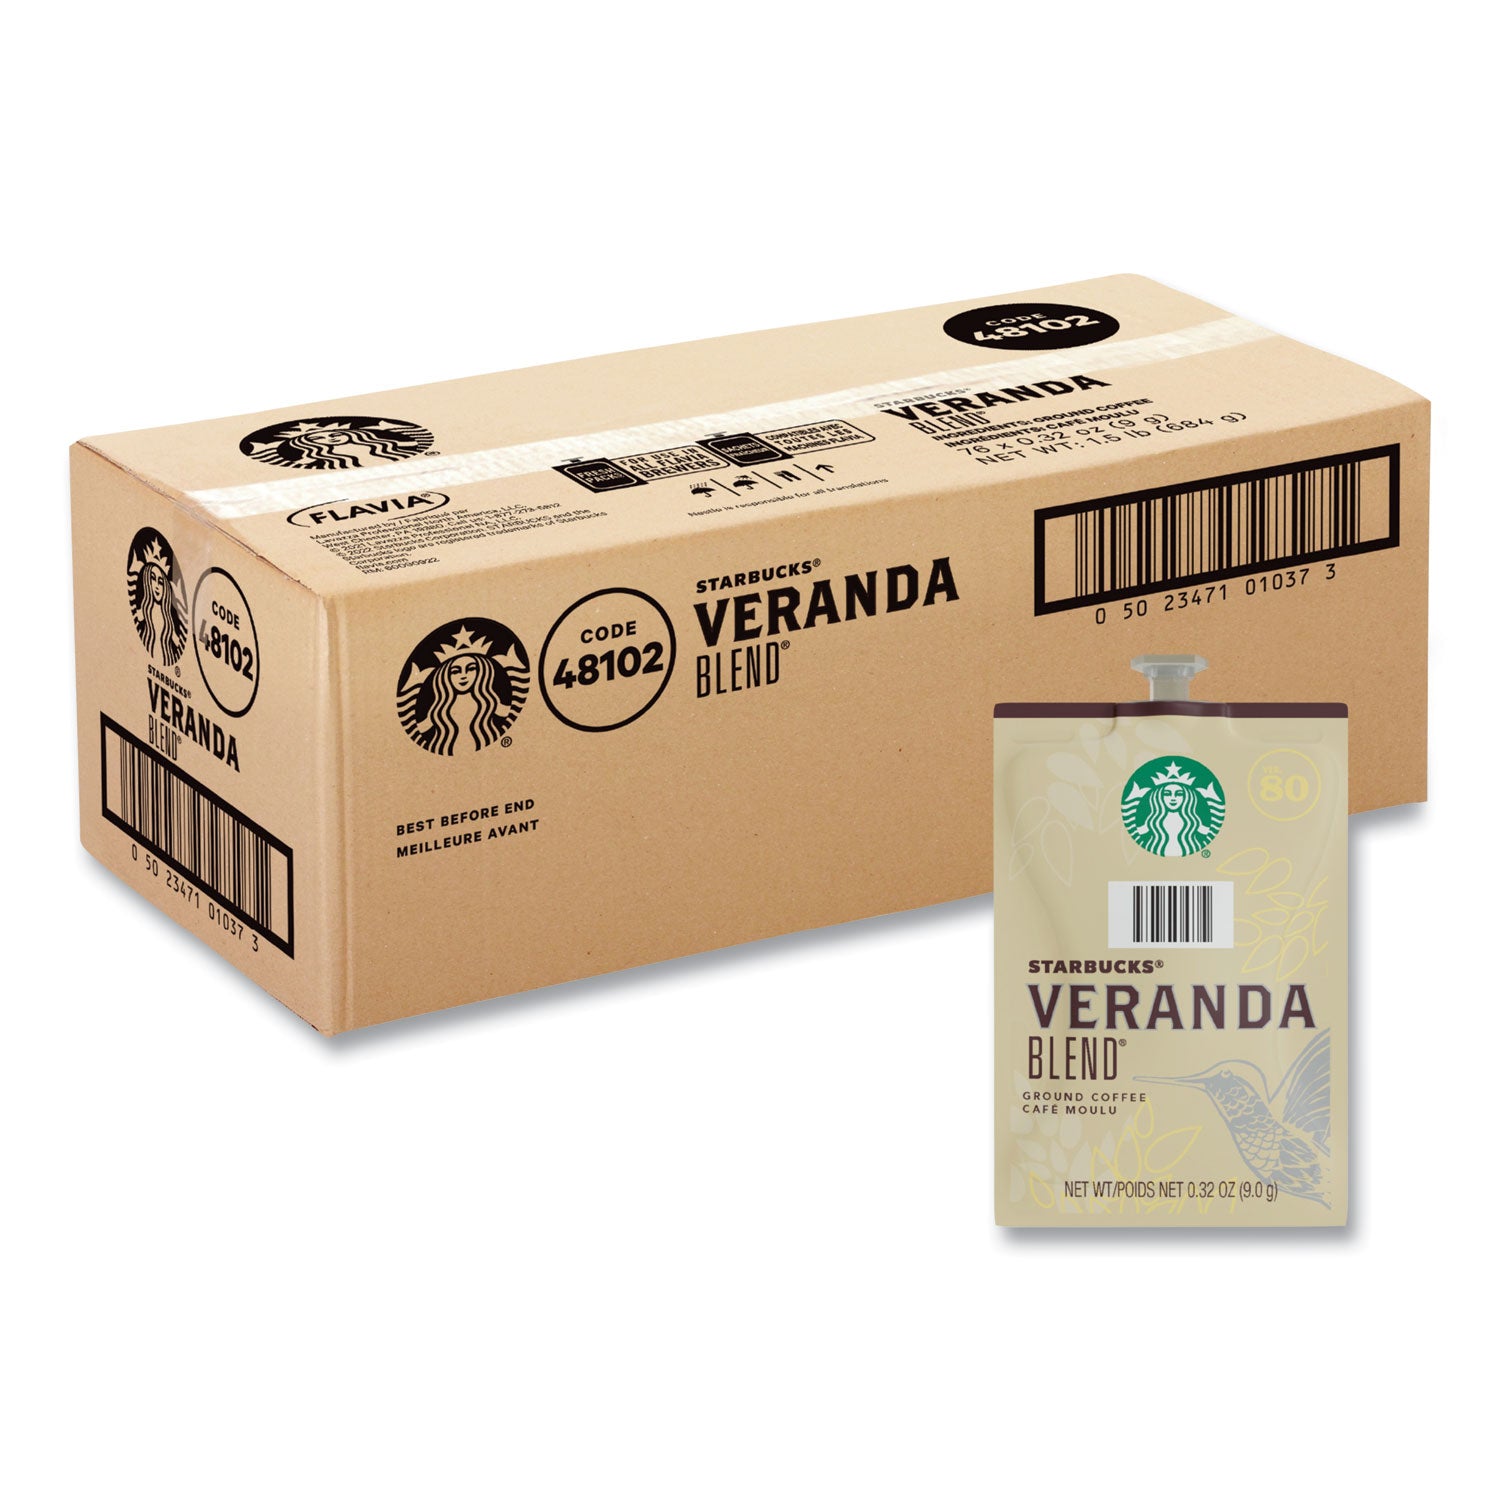 starbucks-veranda-blend-coffee-freshpack-veranda-blend-032-oz-pouch-76-carton_lav48102 - 1